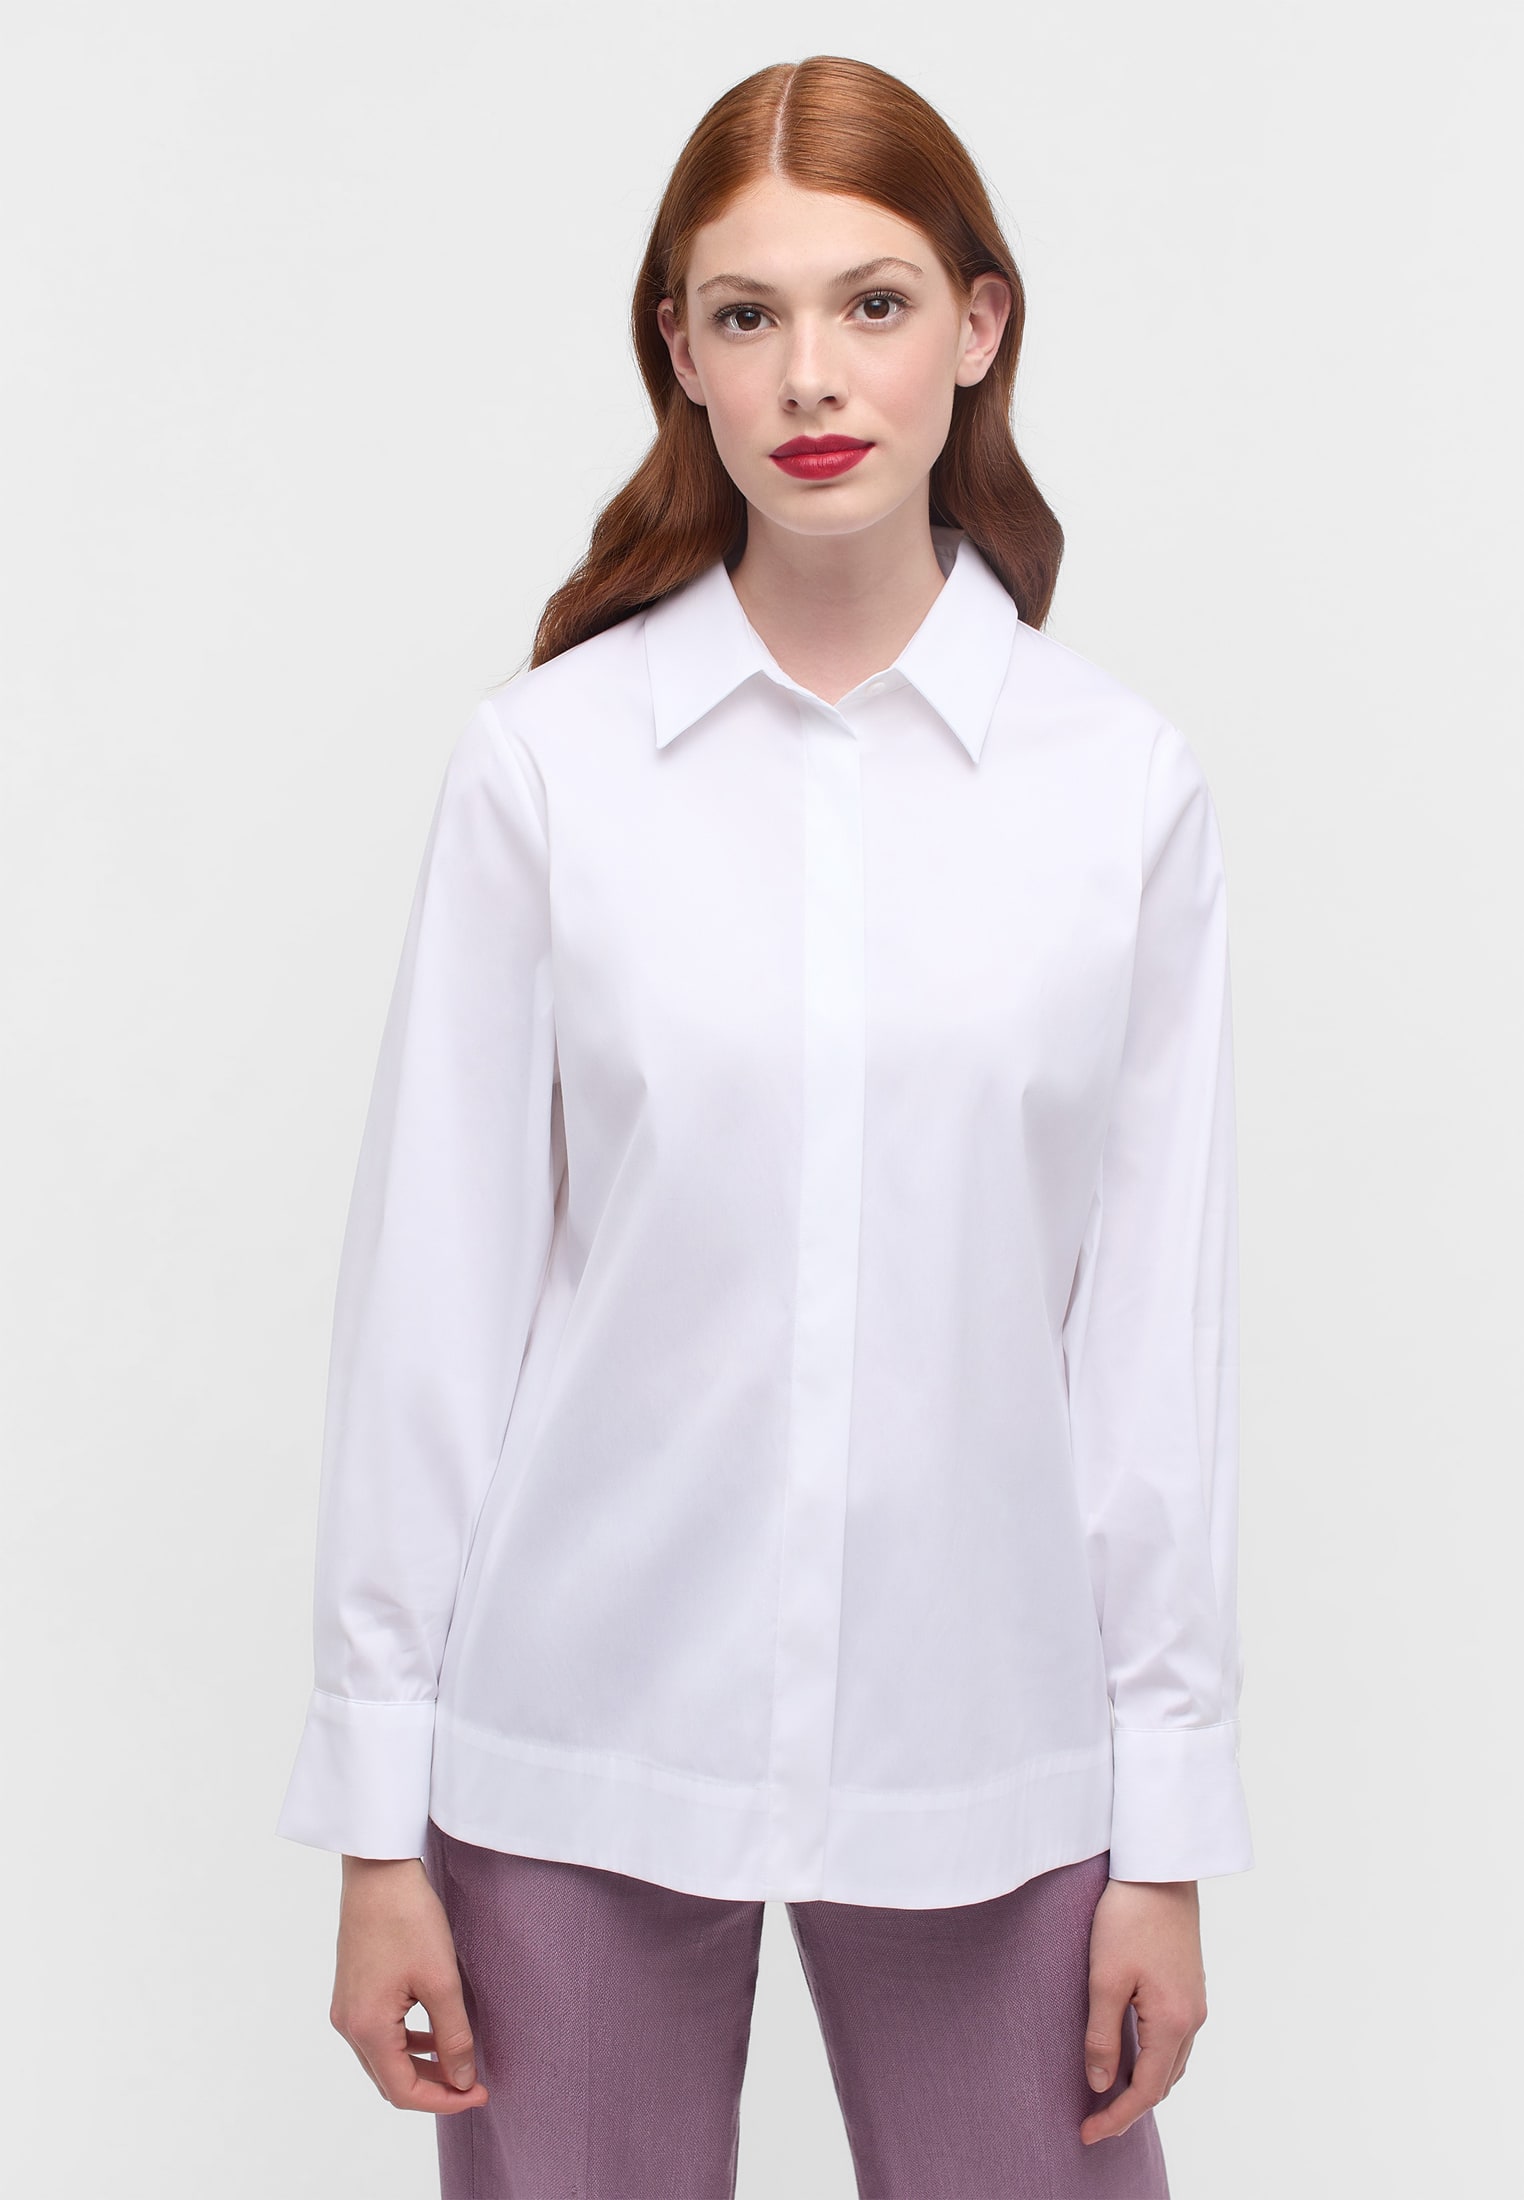 Tunic White Shirt Women Chiffon Flower Embroidery Blouse V neck Office –  ETERNA